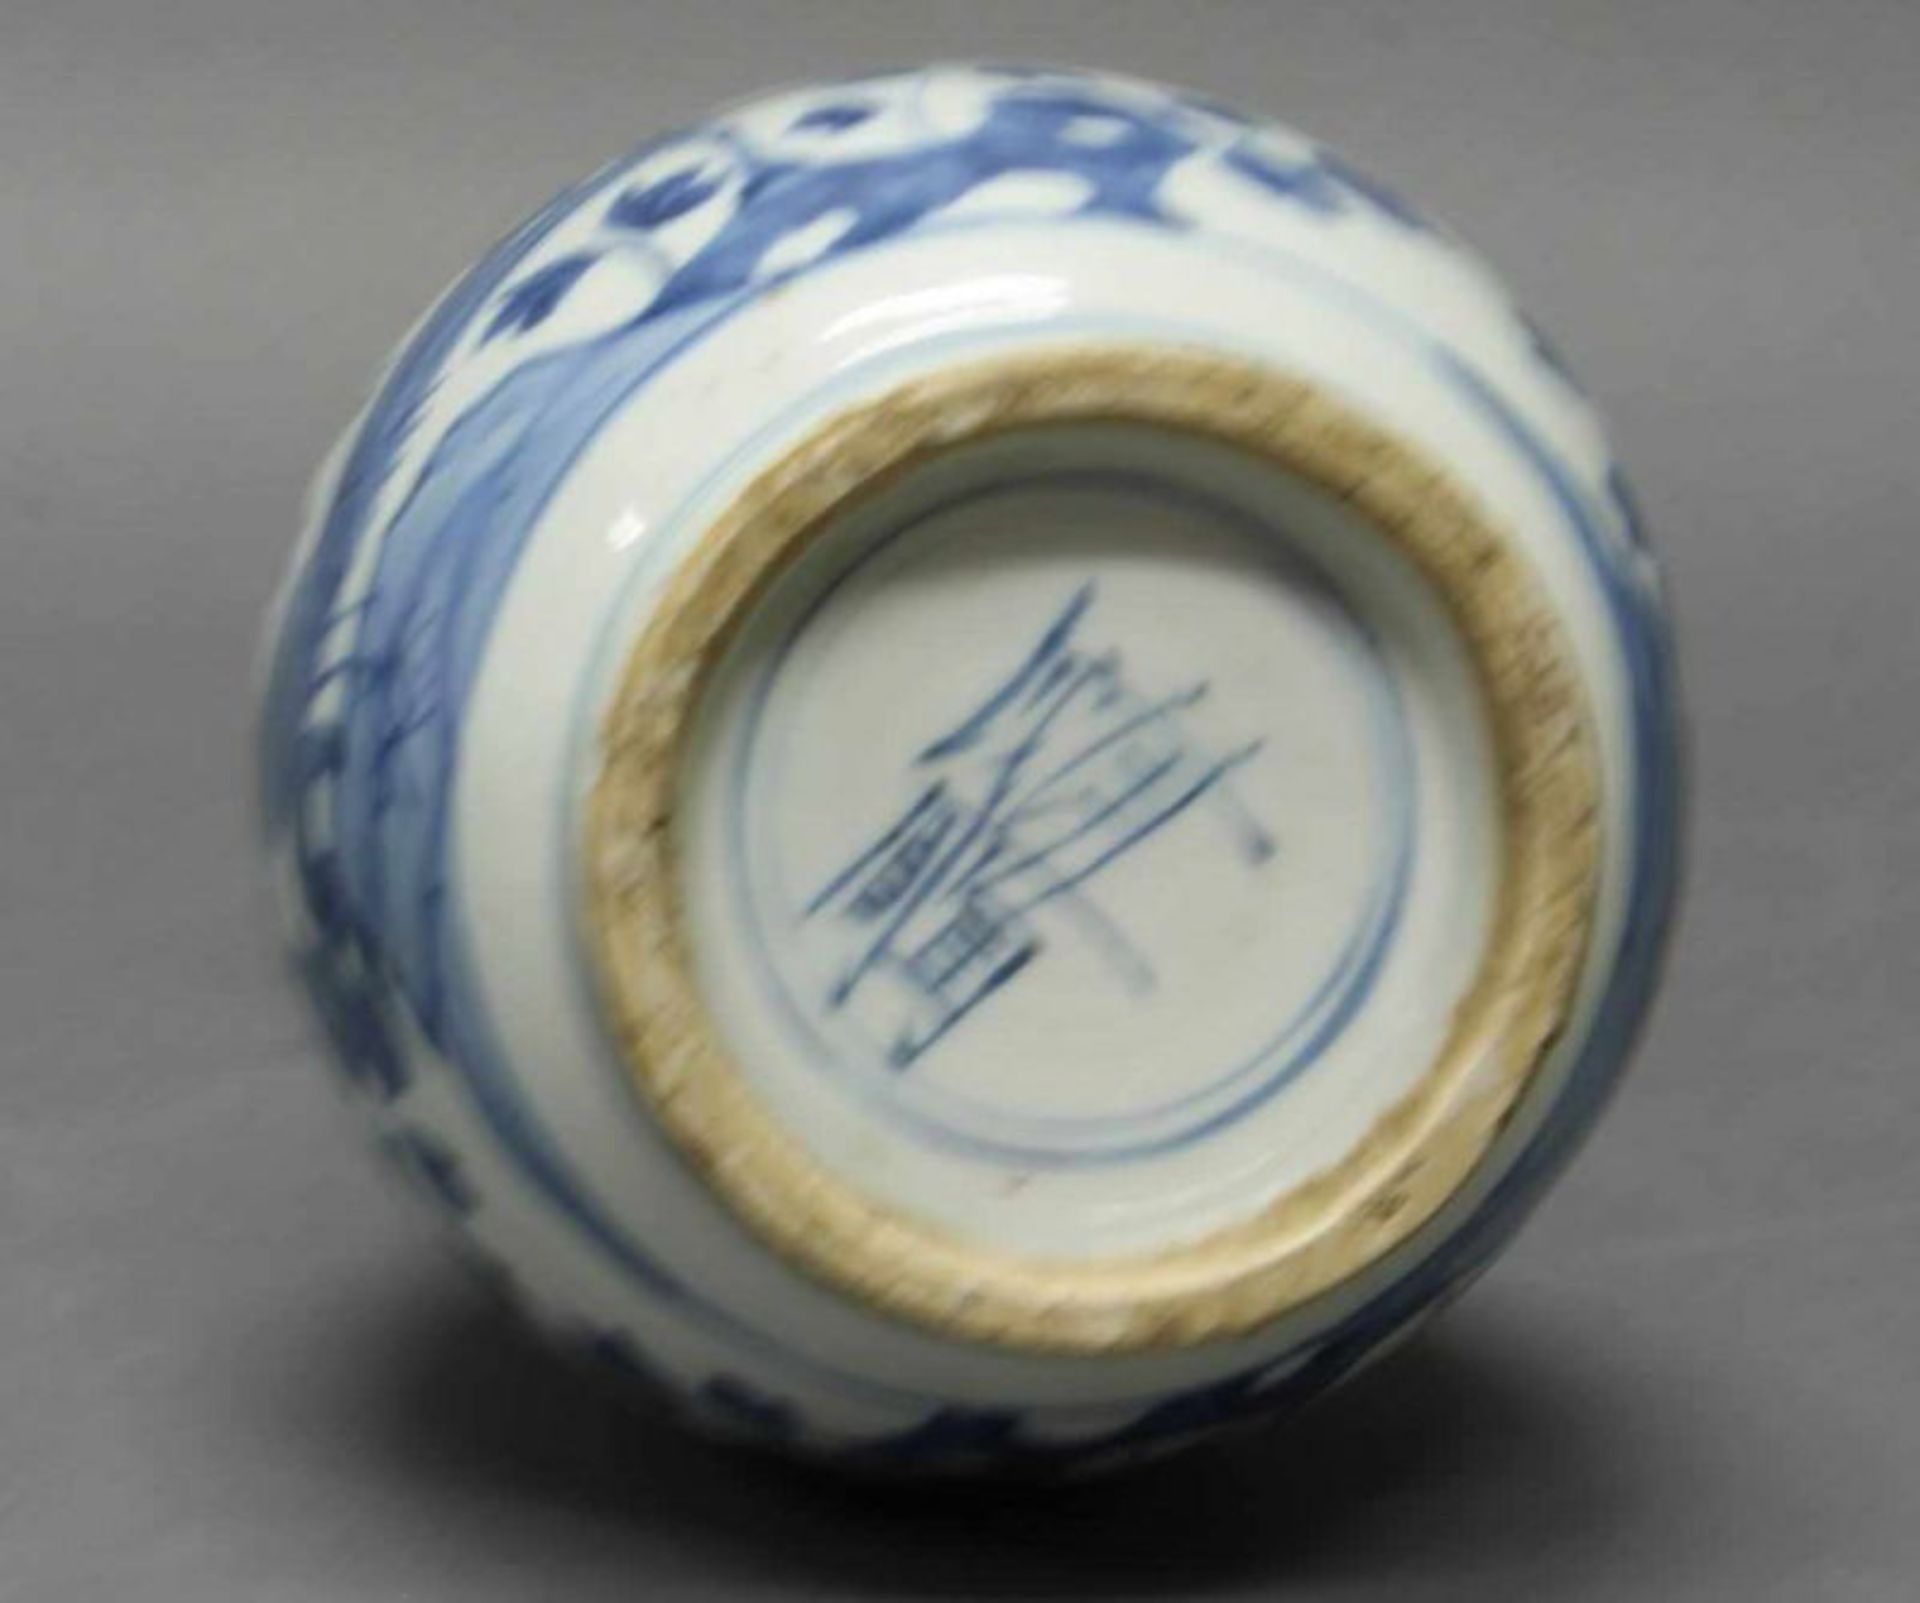 Vase, China, 20. Jh., Porzellan, floraler Blaudekor, blaue Bodenmarke, 26.5 cm hoch 20.00 % buyer' - Image 2 of 2